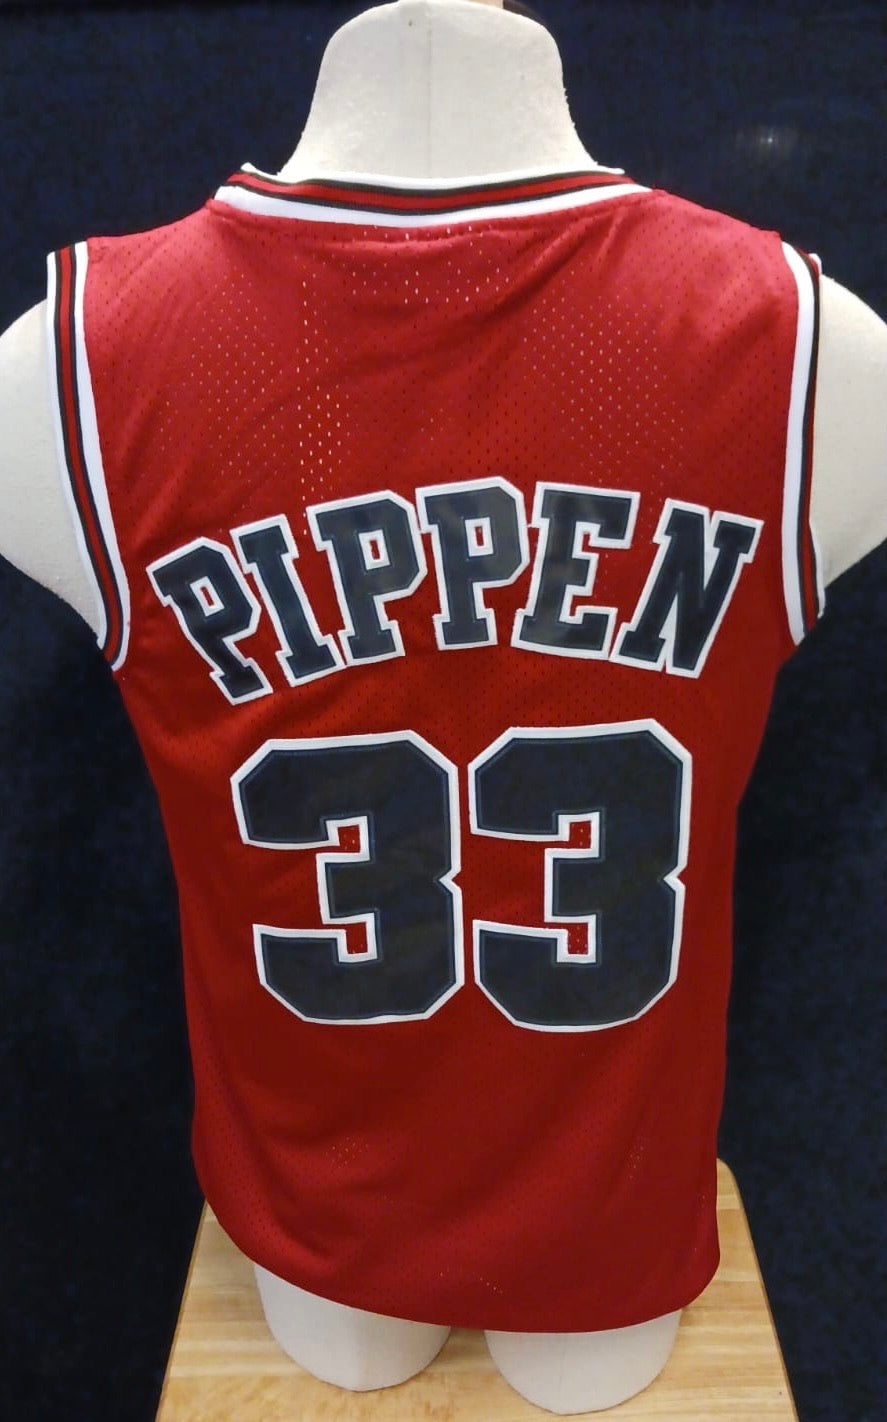 Chicago Bulls Jersey - 33 Scottie Pippen